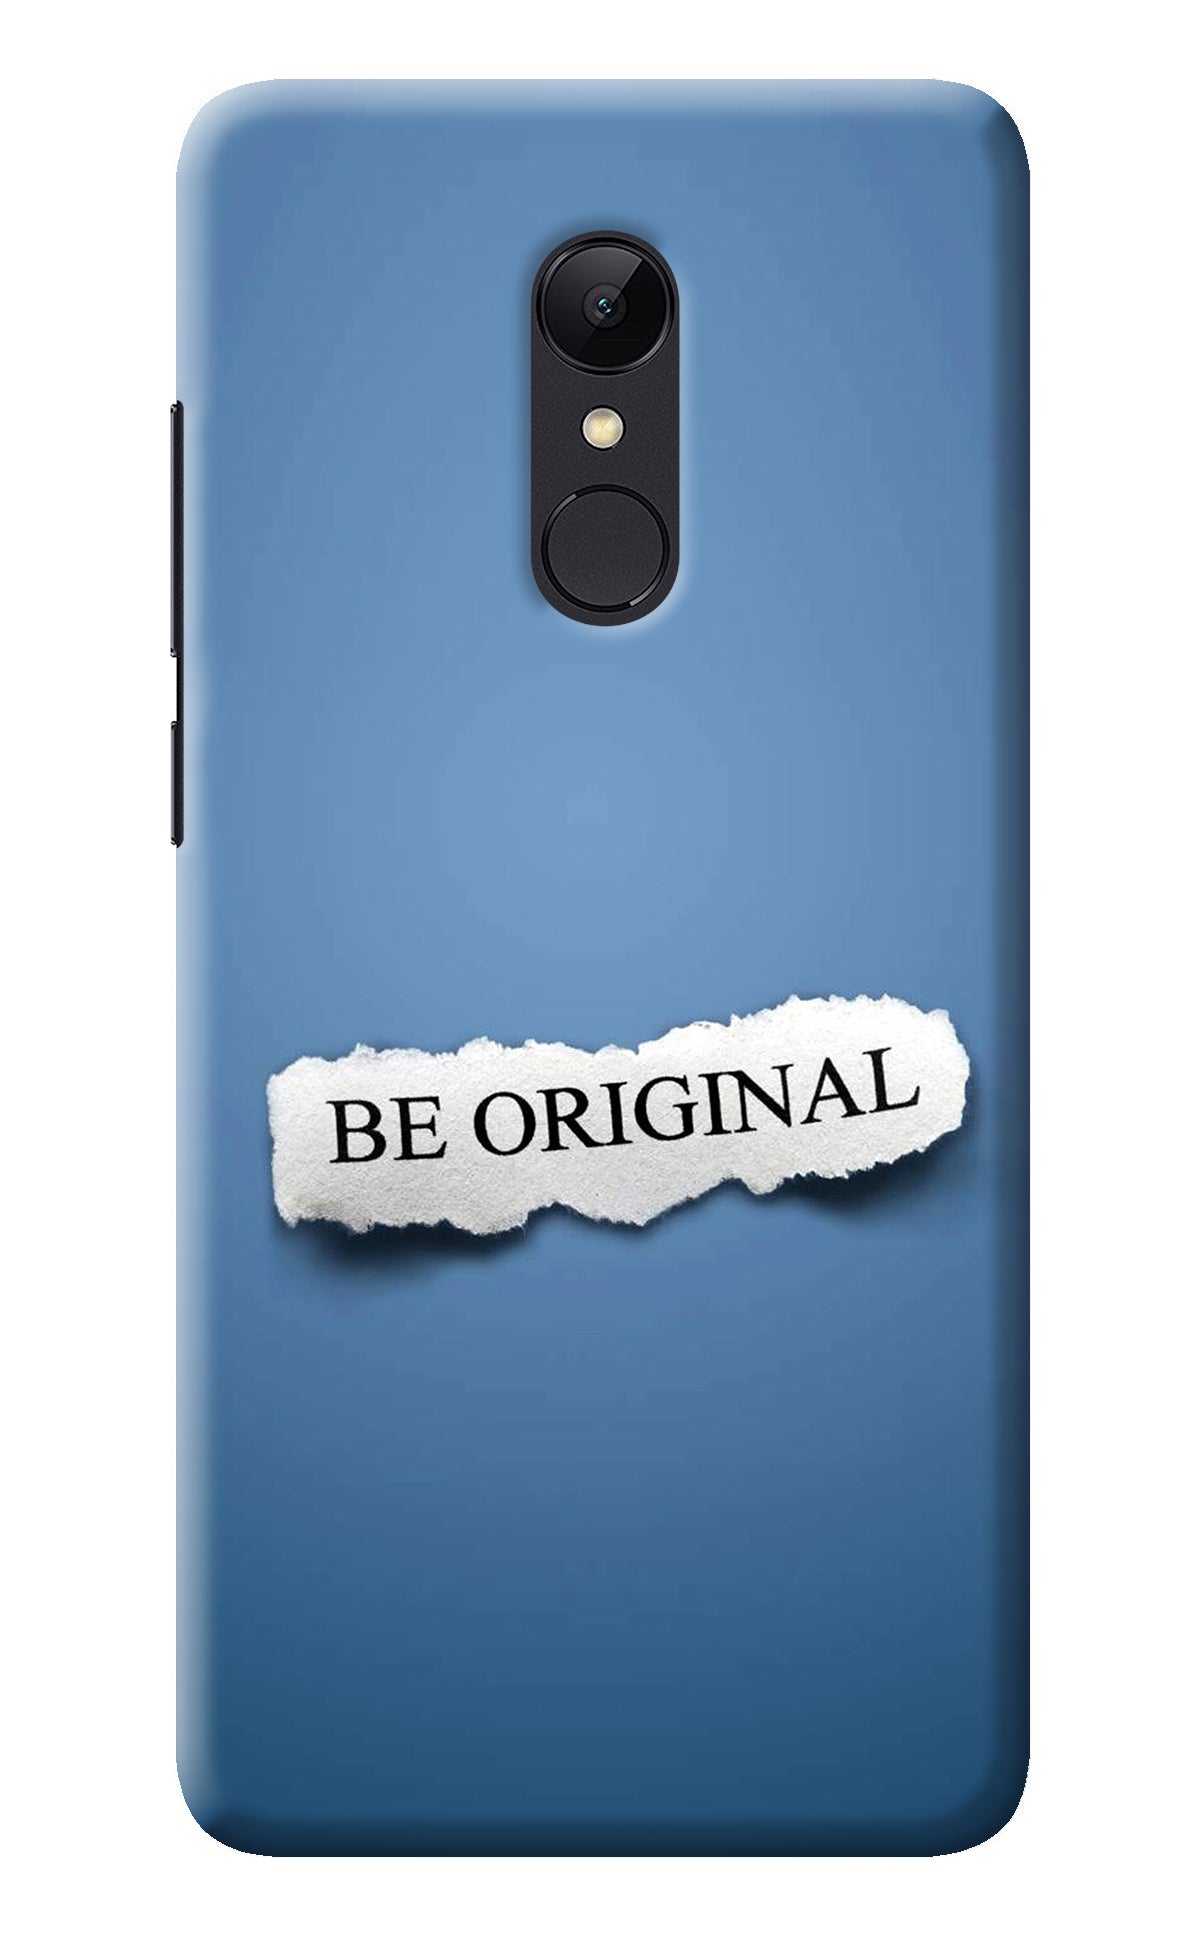 Be Original Redmi Note 4 Back Cover